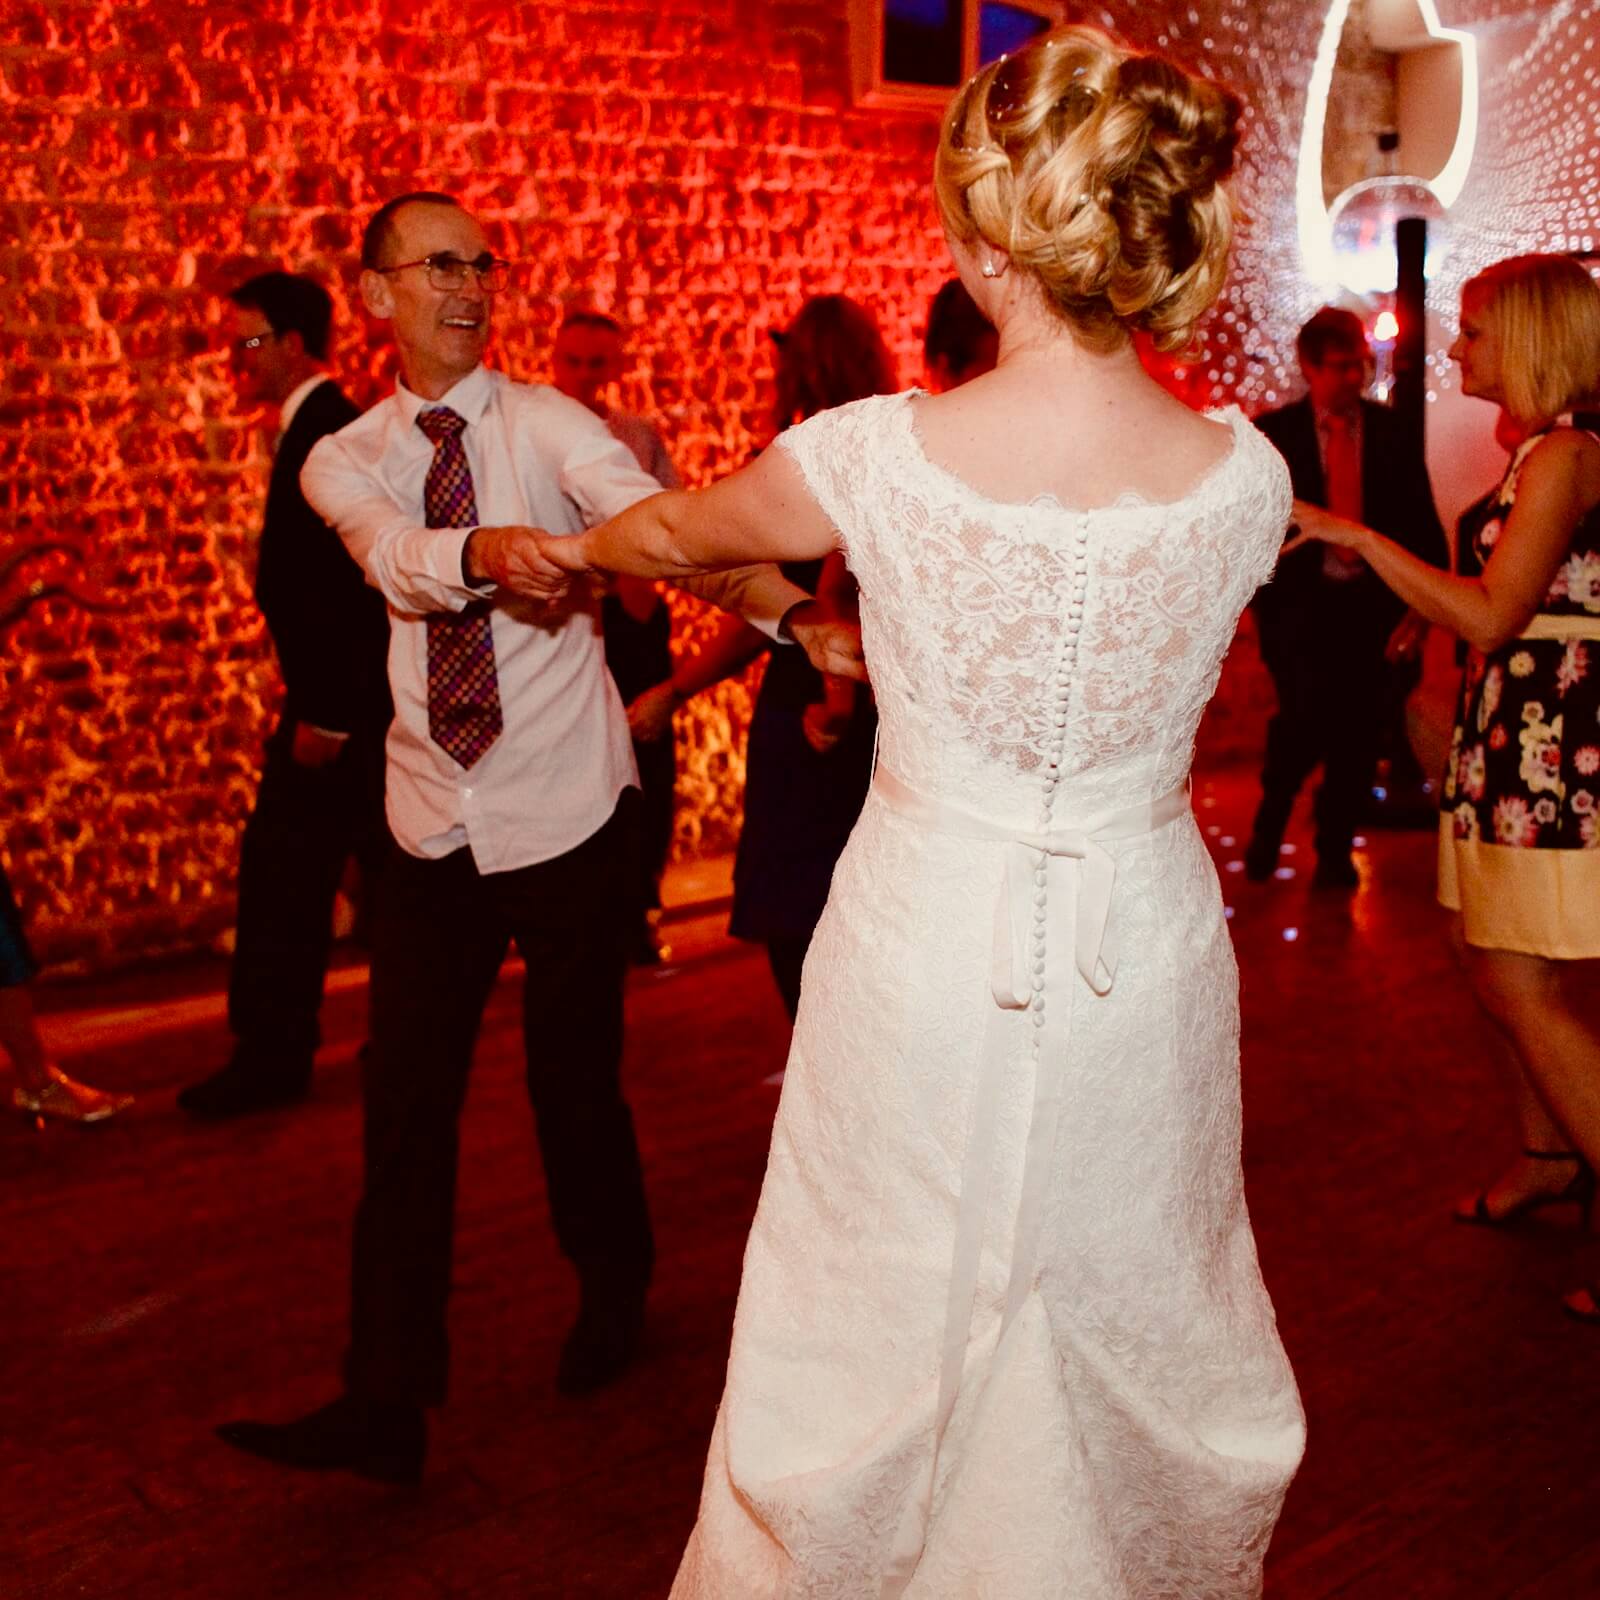 wedding dancing at cowdray walled garden